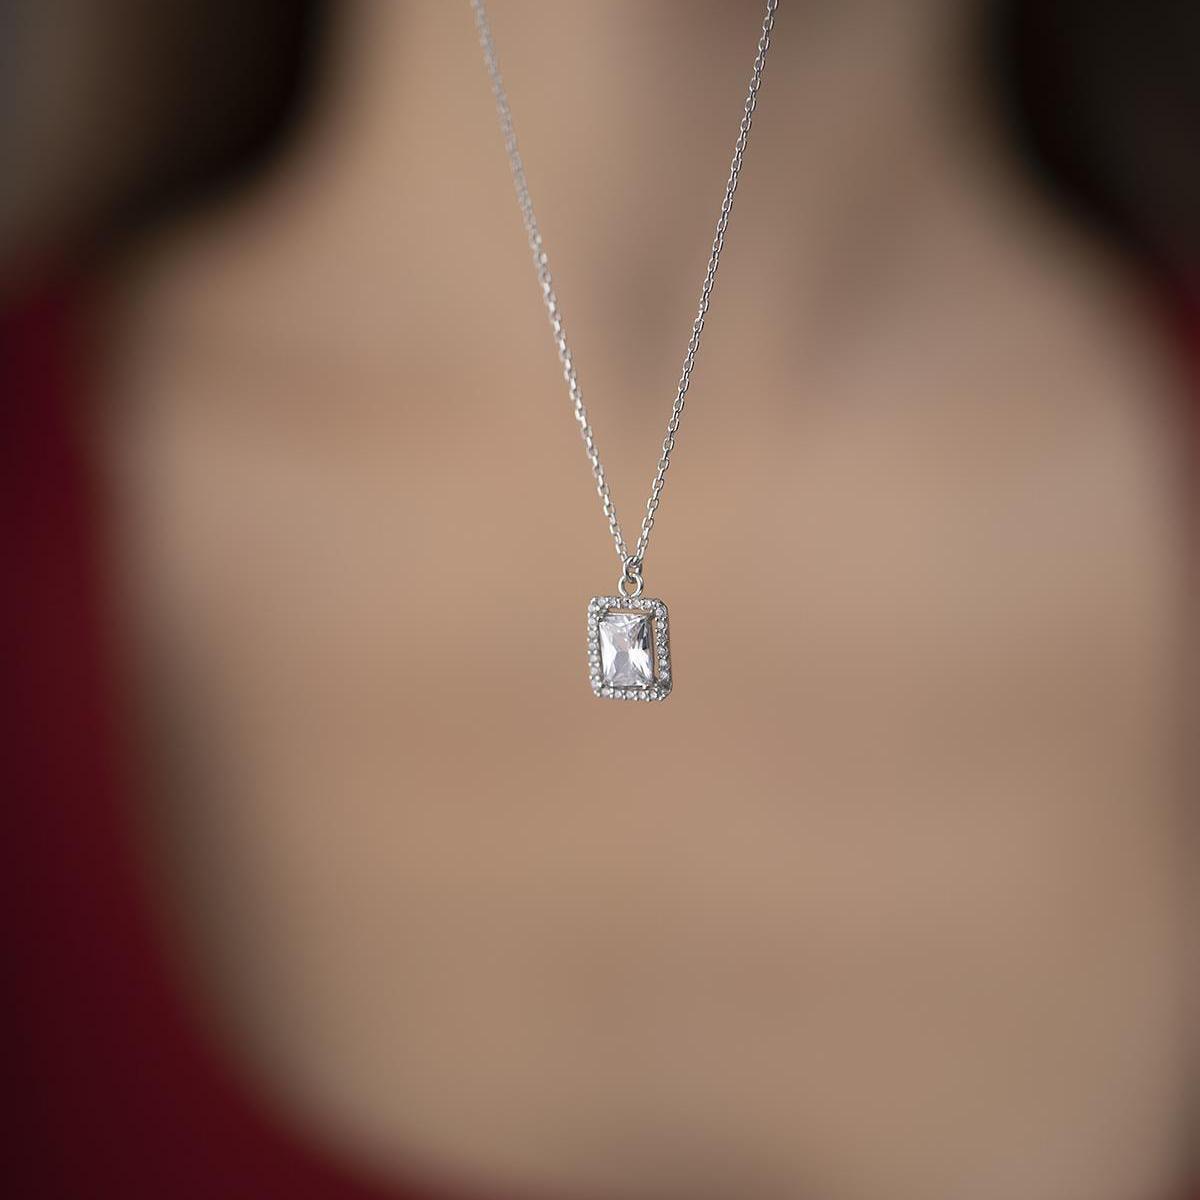 Diamond Baguette Zircon Necklace • Solitaire Diamond Pendant Necklace - Trending Silver Gifts